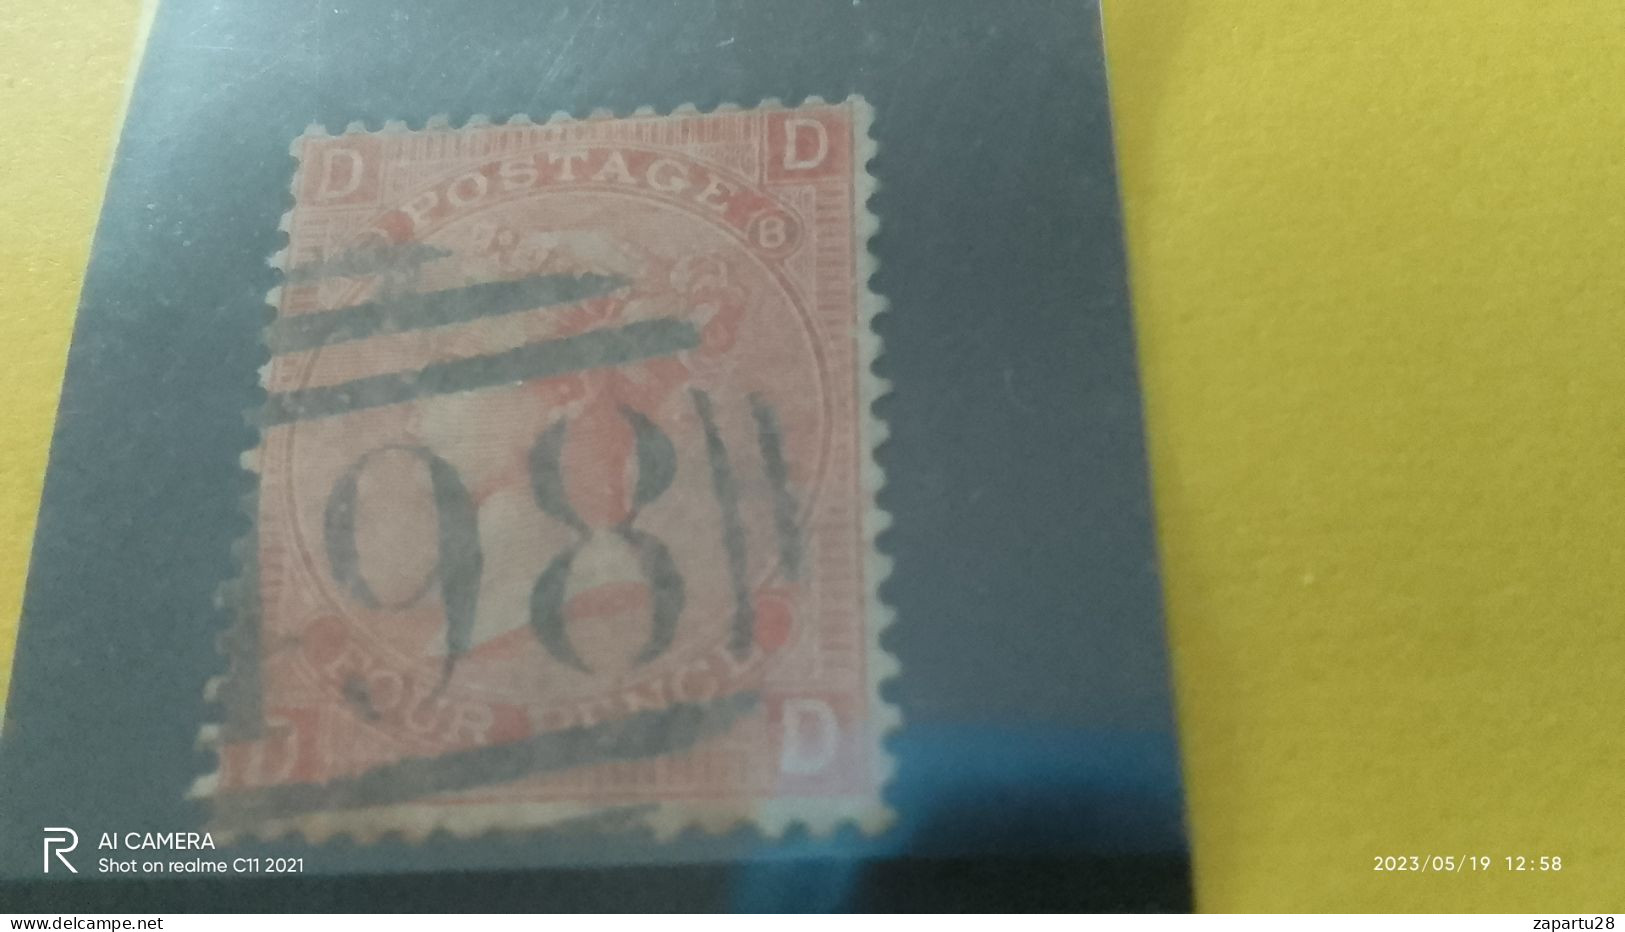 İNGİLTERE- 1865-              4P          VİCTORIA        USED - Used Stamps